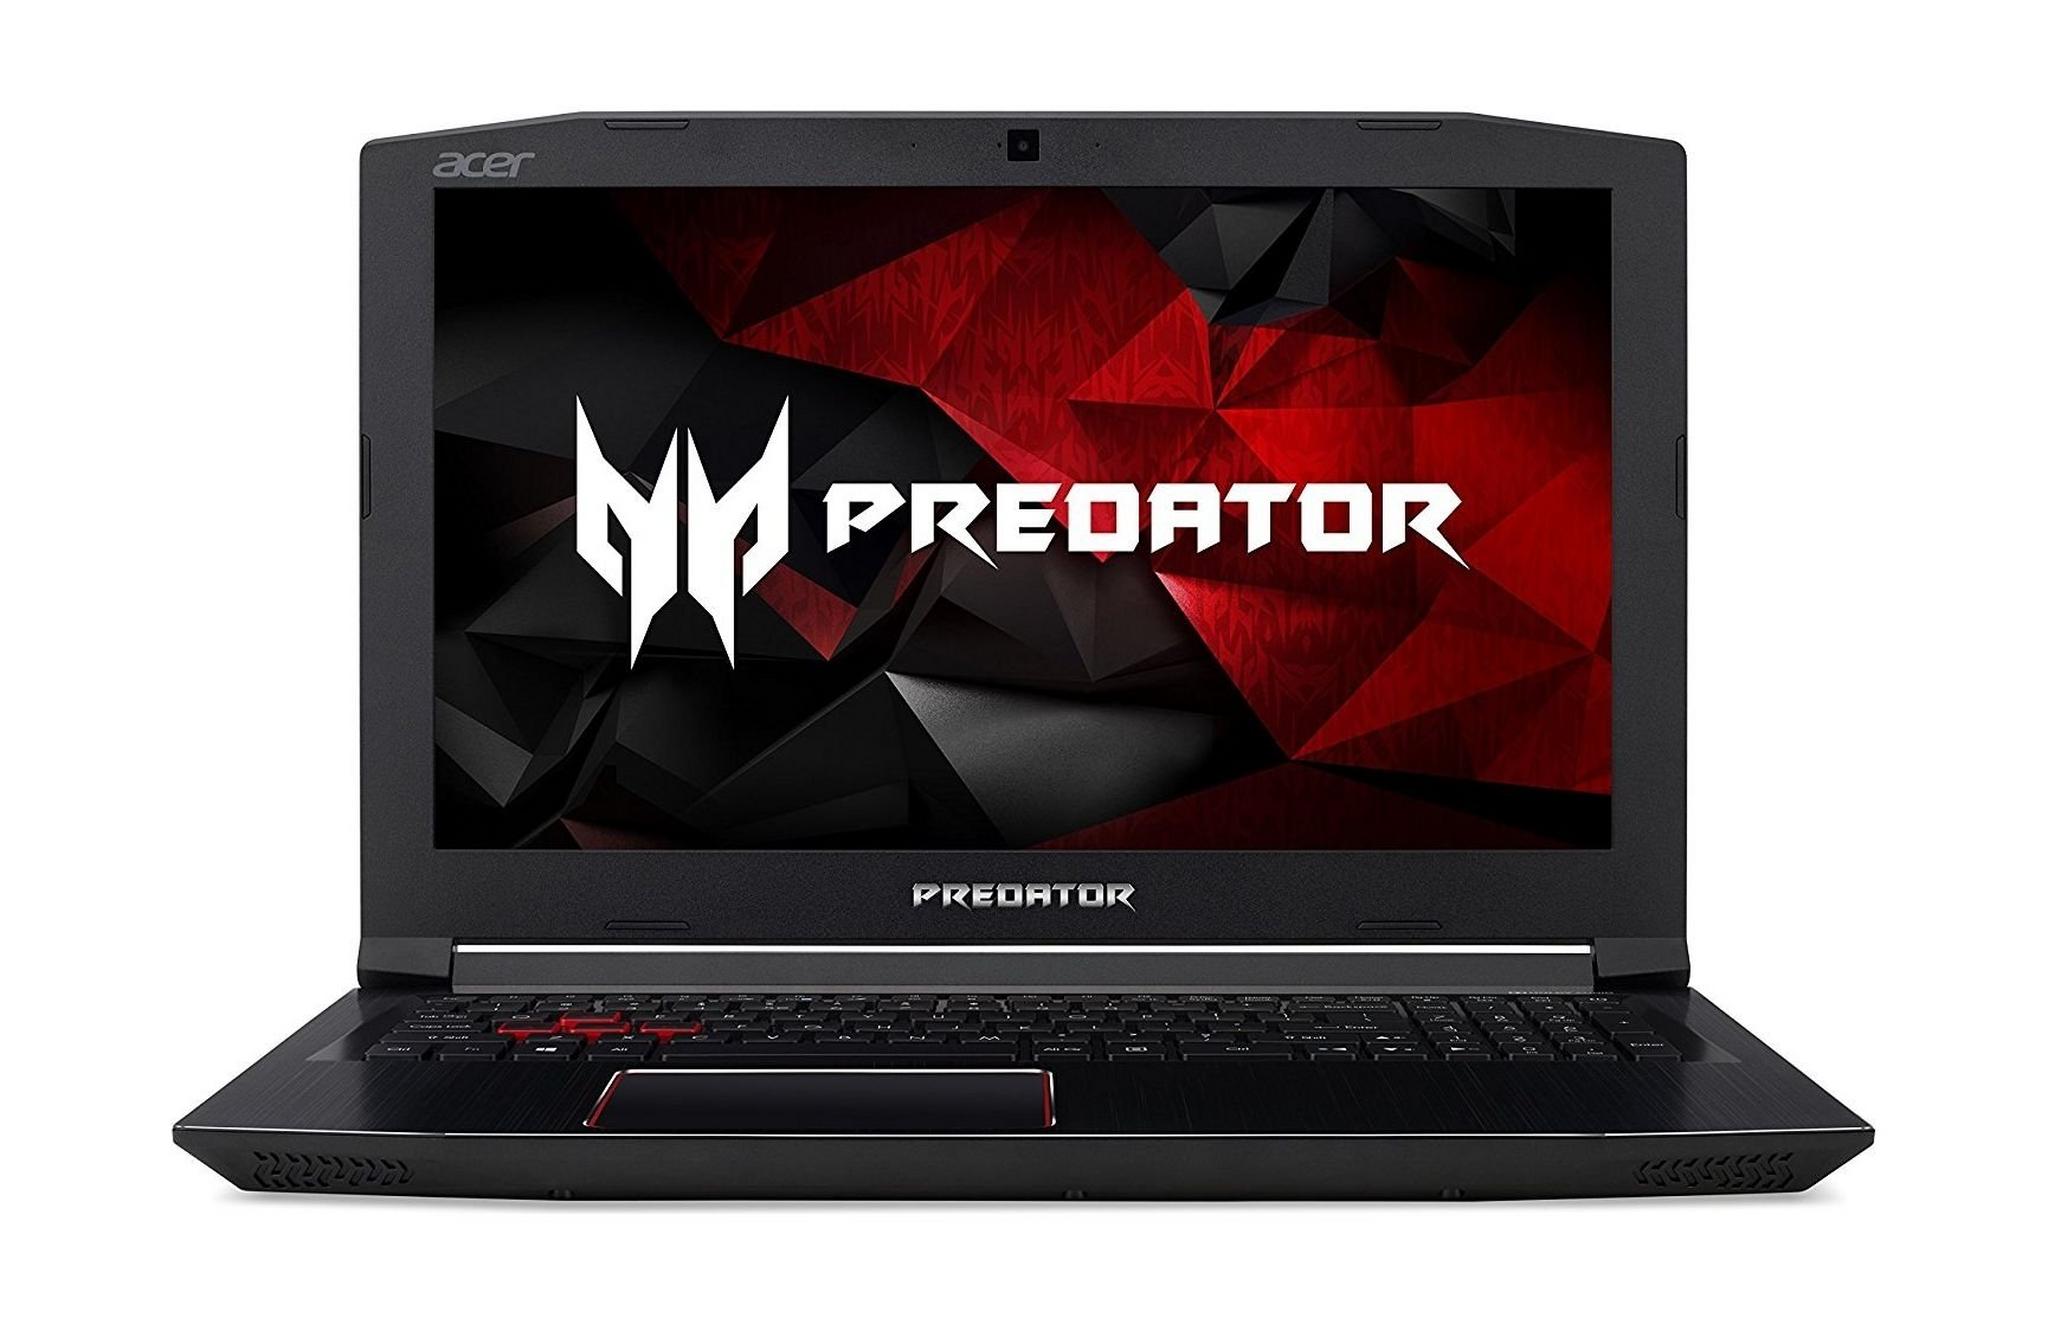 Acer Predator Helios 300 GeForce GTX 1060 6GB Core i7 8750H 32GB RAM 2TB HDD + 512 SSD 17.3 inch Gaming Laptop - (PH317-5272UK)